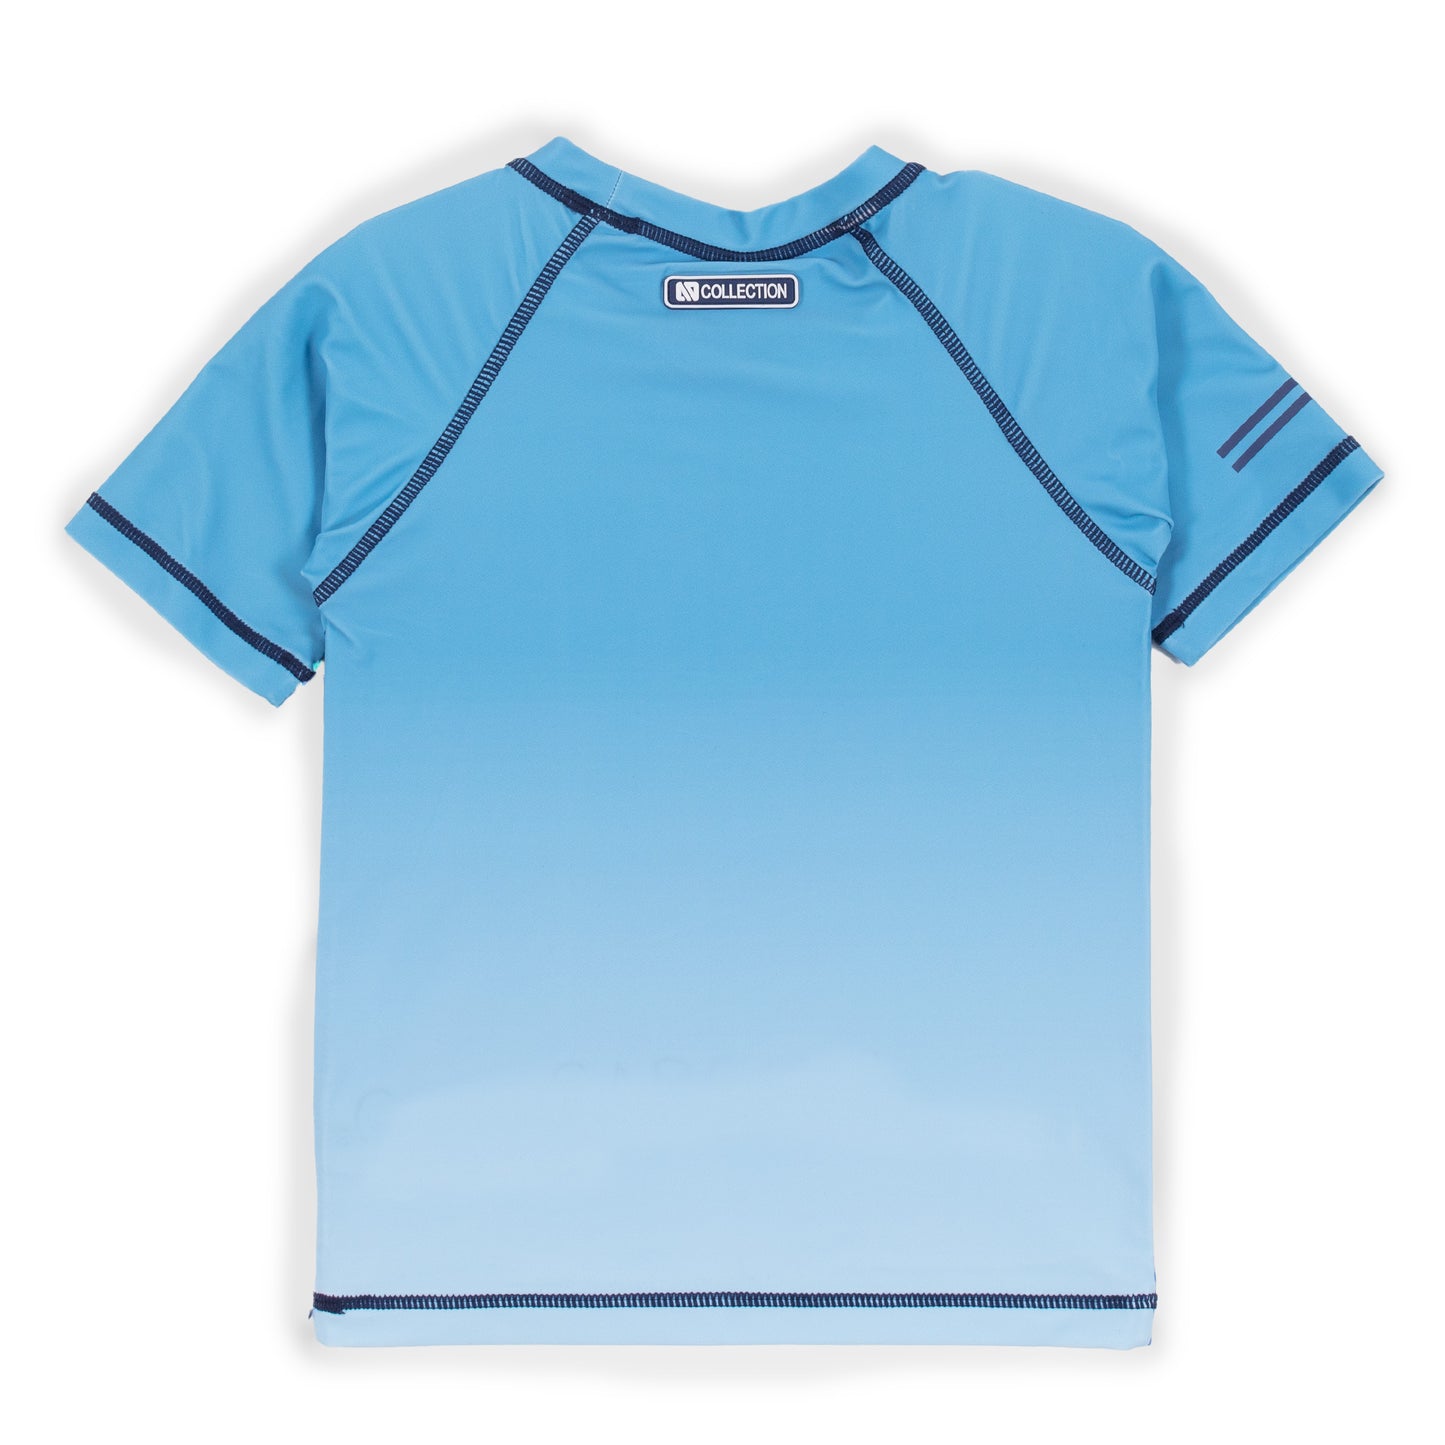 T-shirt maillot - Niagara -  S23S201-07 - 12 à 24 mois